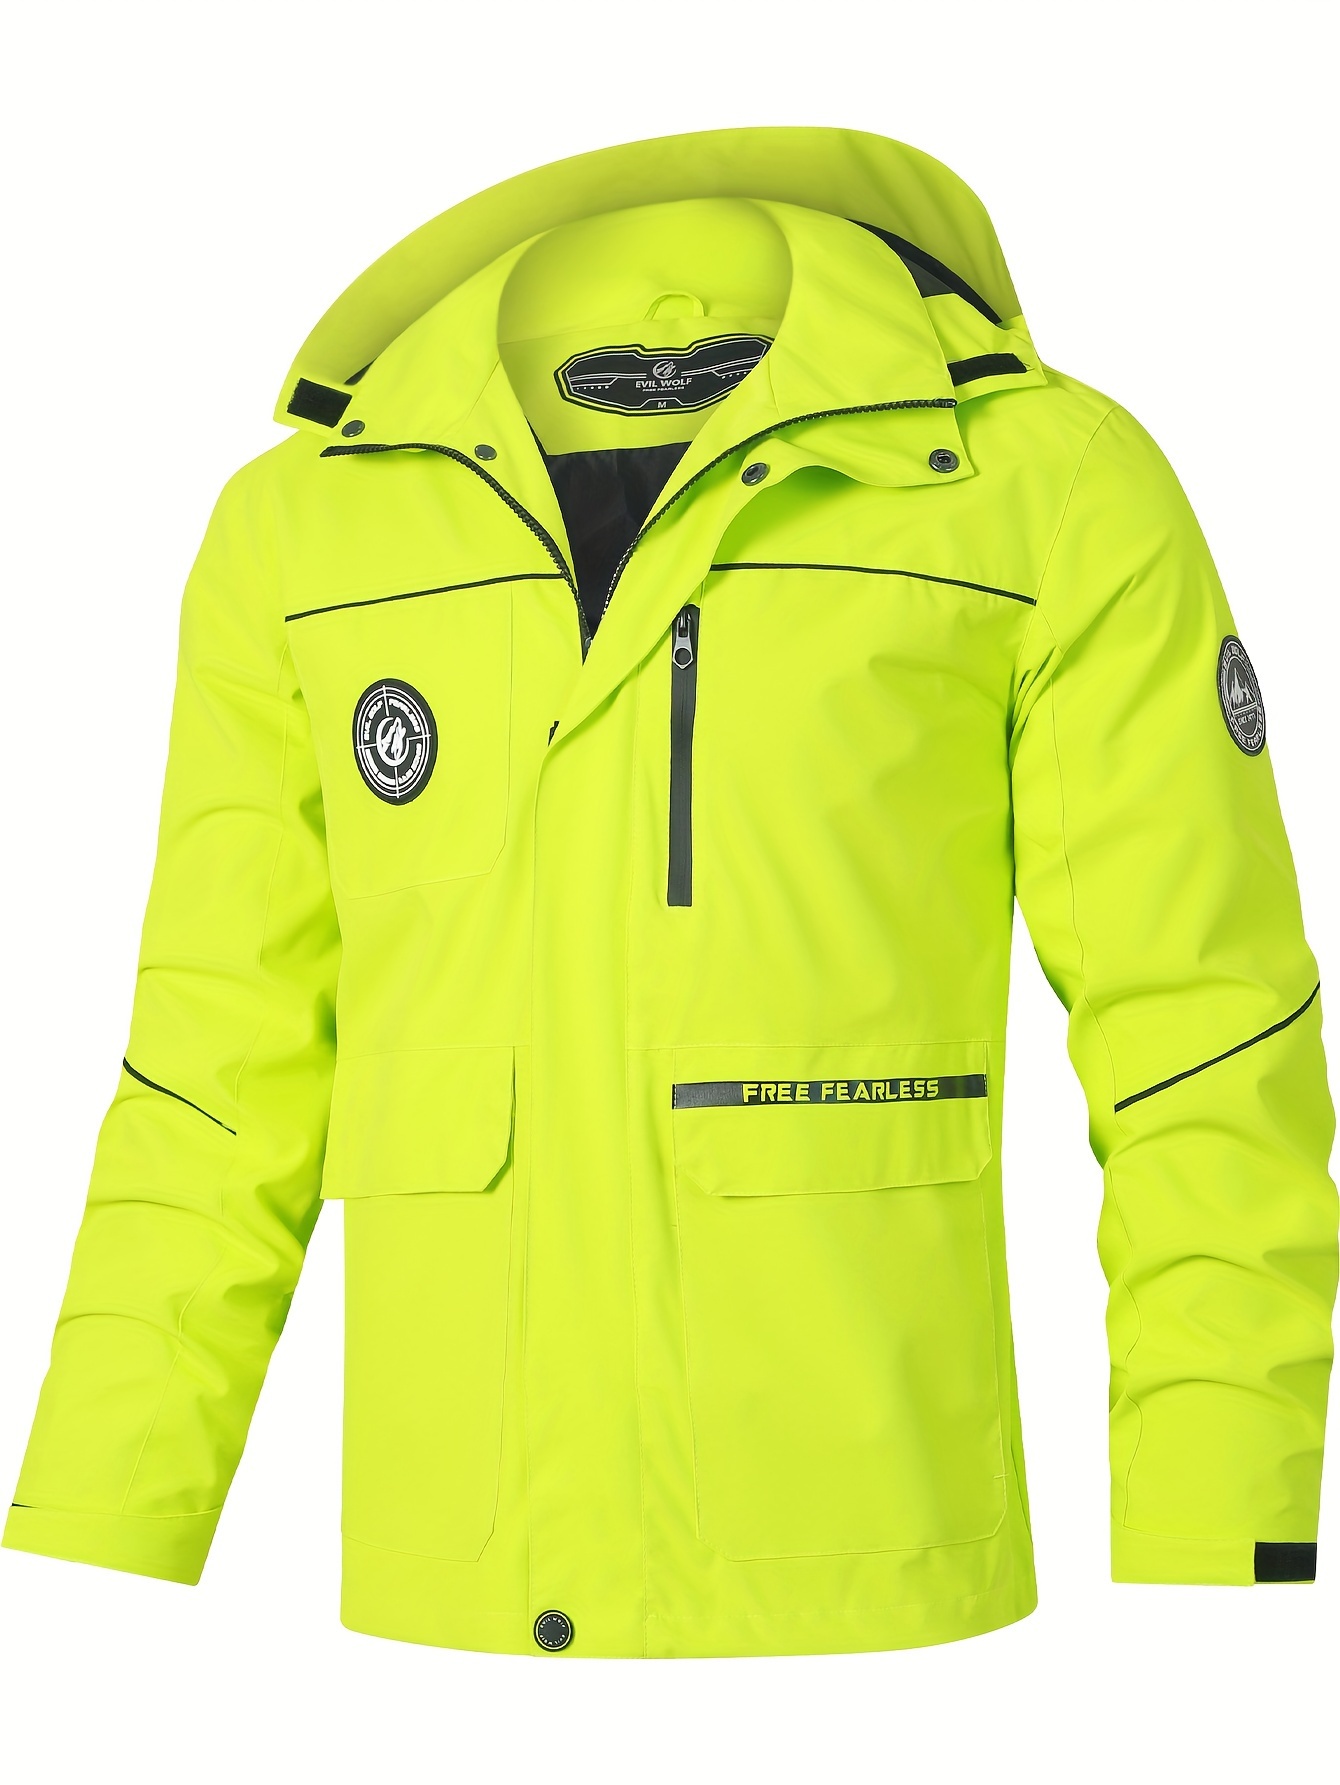 mens casual hooded windbreaker jacket multi pocket jacket for outdoor activities